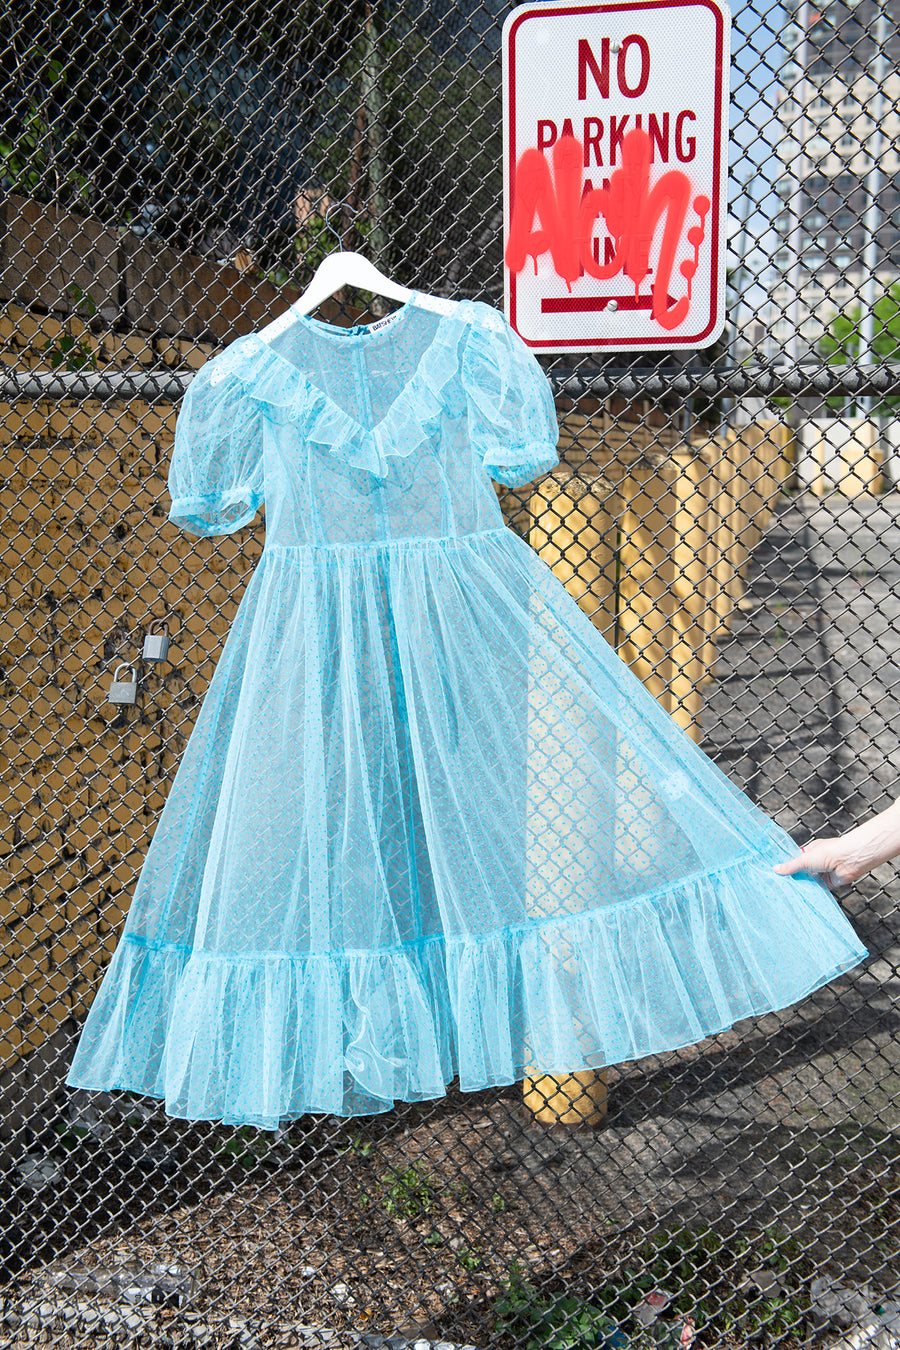 BATSHEVA - One-of-a-Kind Ruffle May Dress in Turquoise Flocked Polka Dot